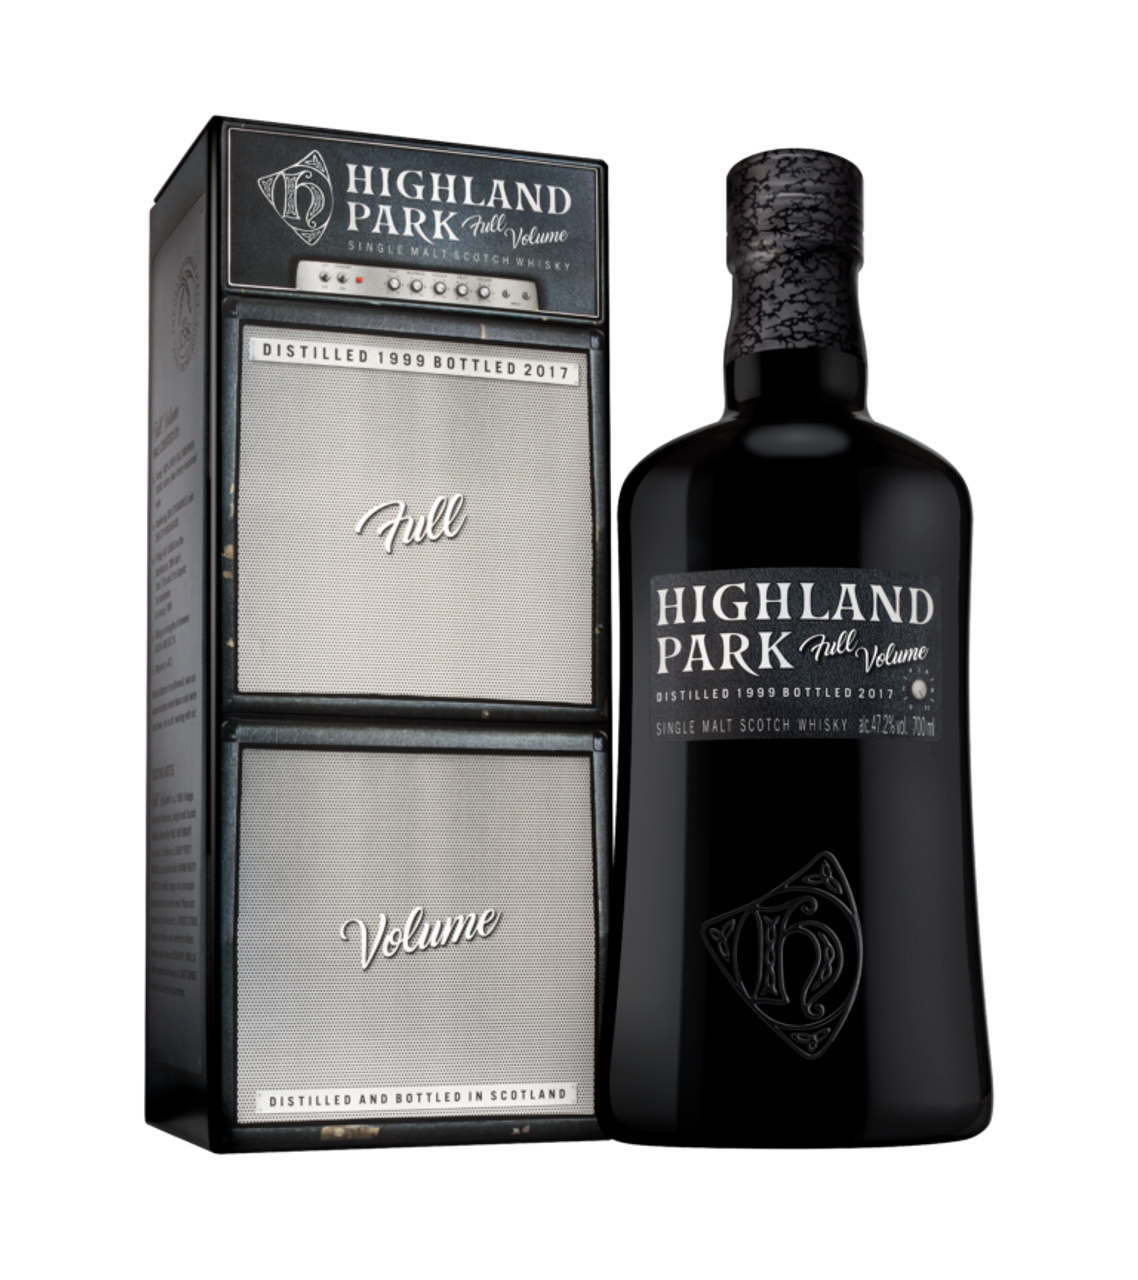 Whisky Shop The San - Volume Park Highland Francisco Old, - Full 17 Year